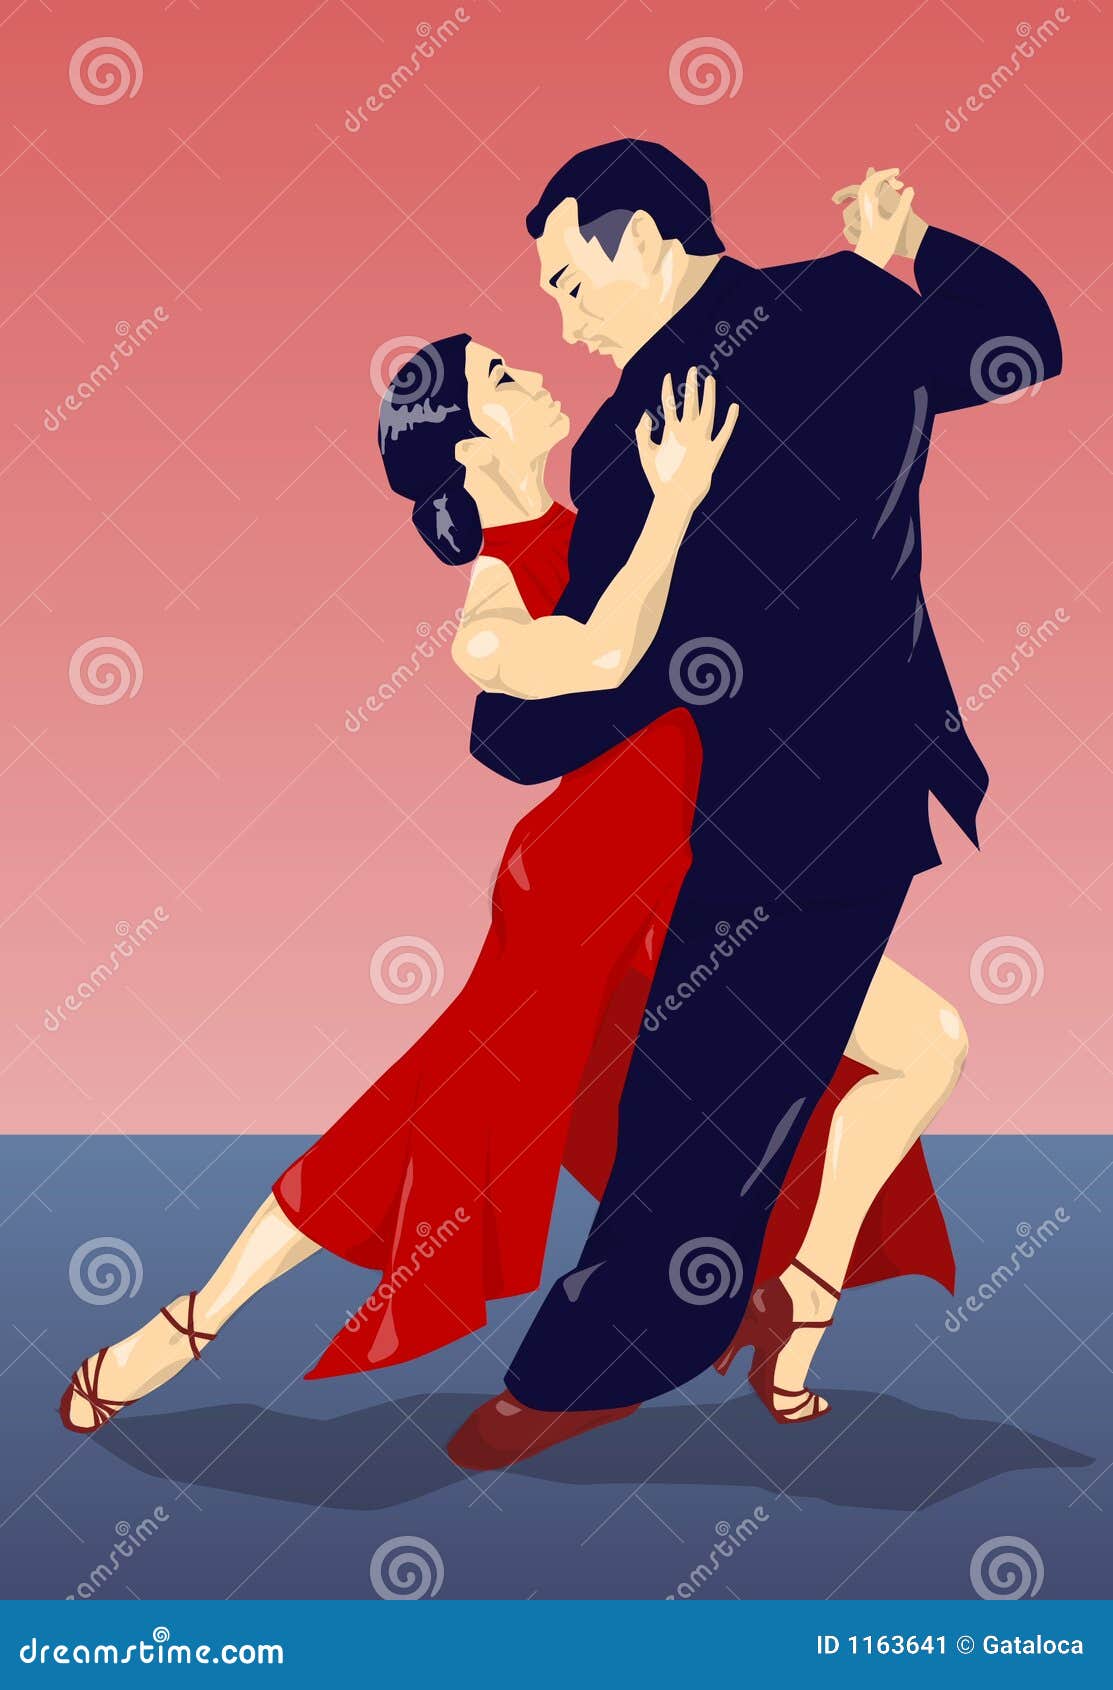 clipart tango argentin - photo #7